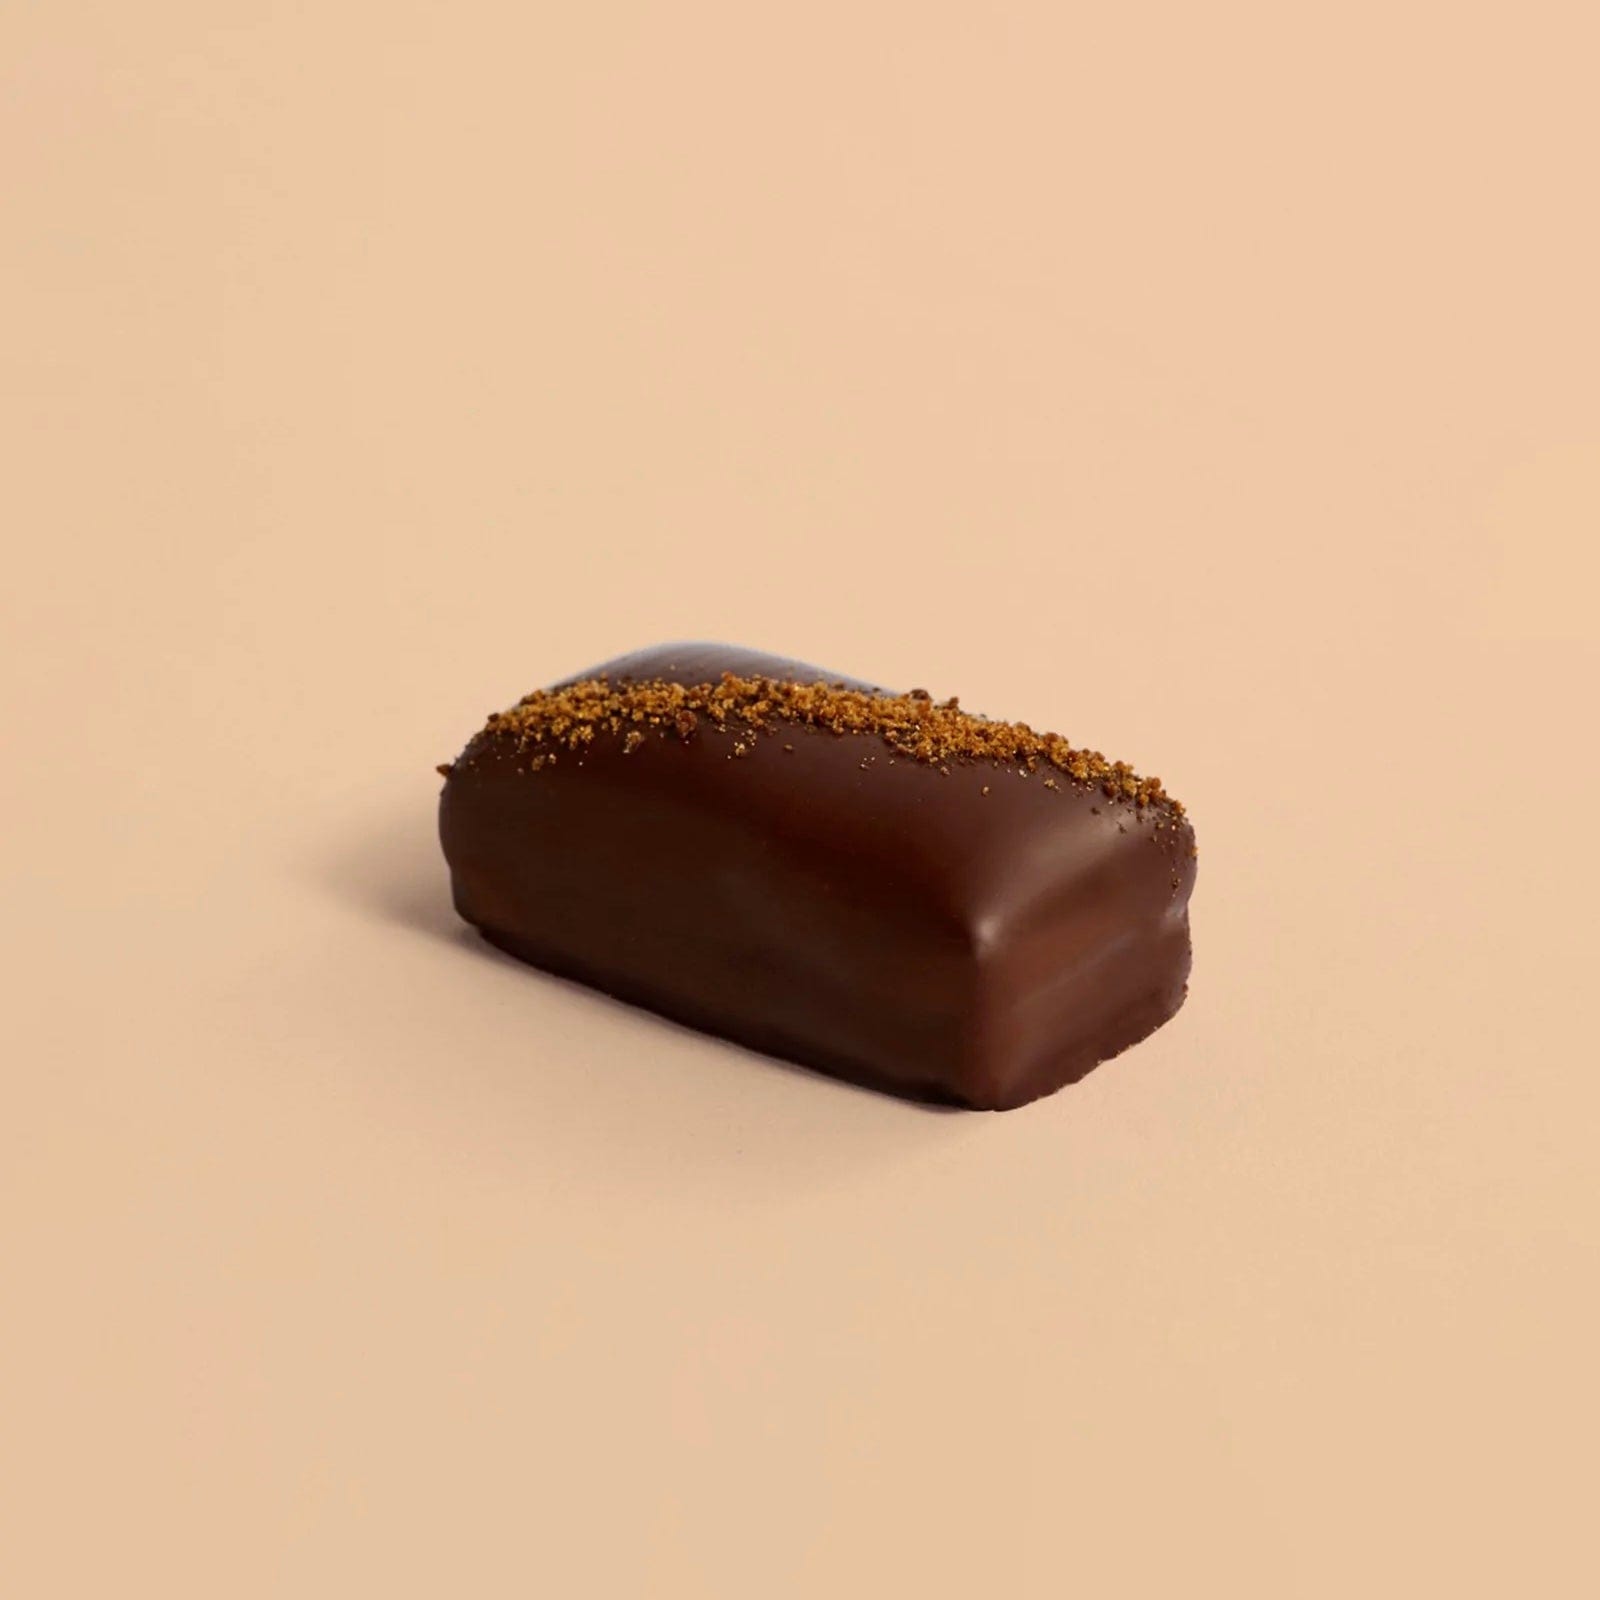 gingerbread caramel chocolate by Loco Love